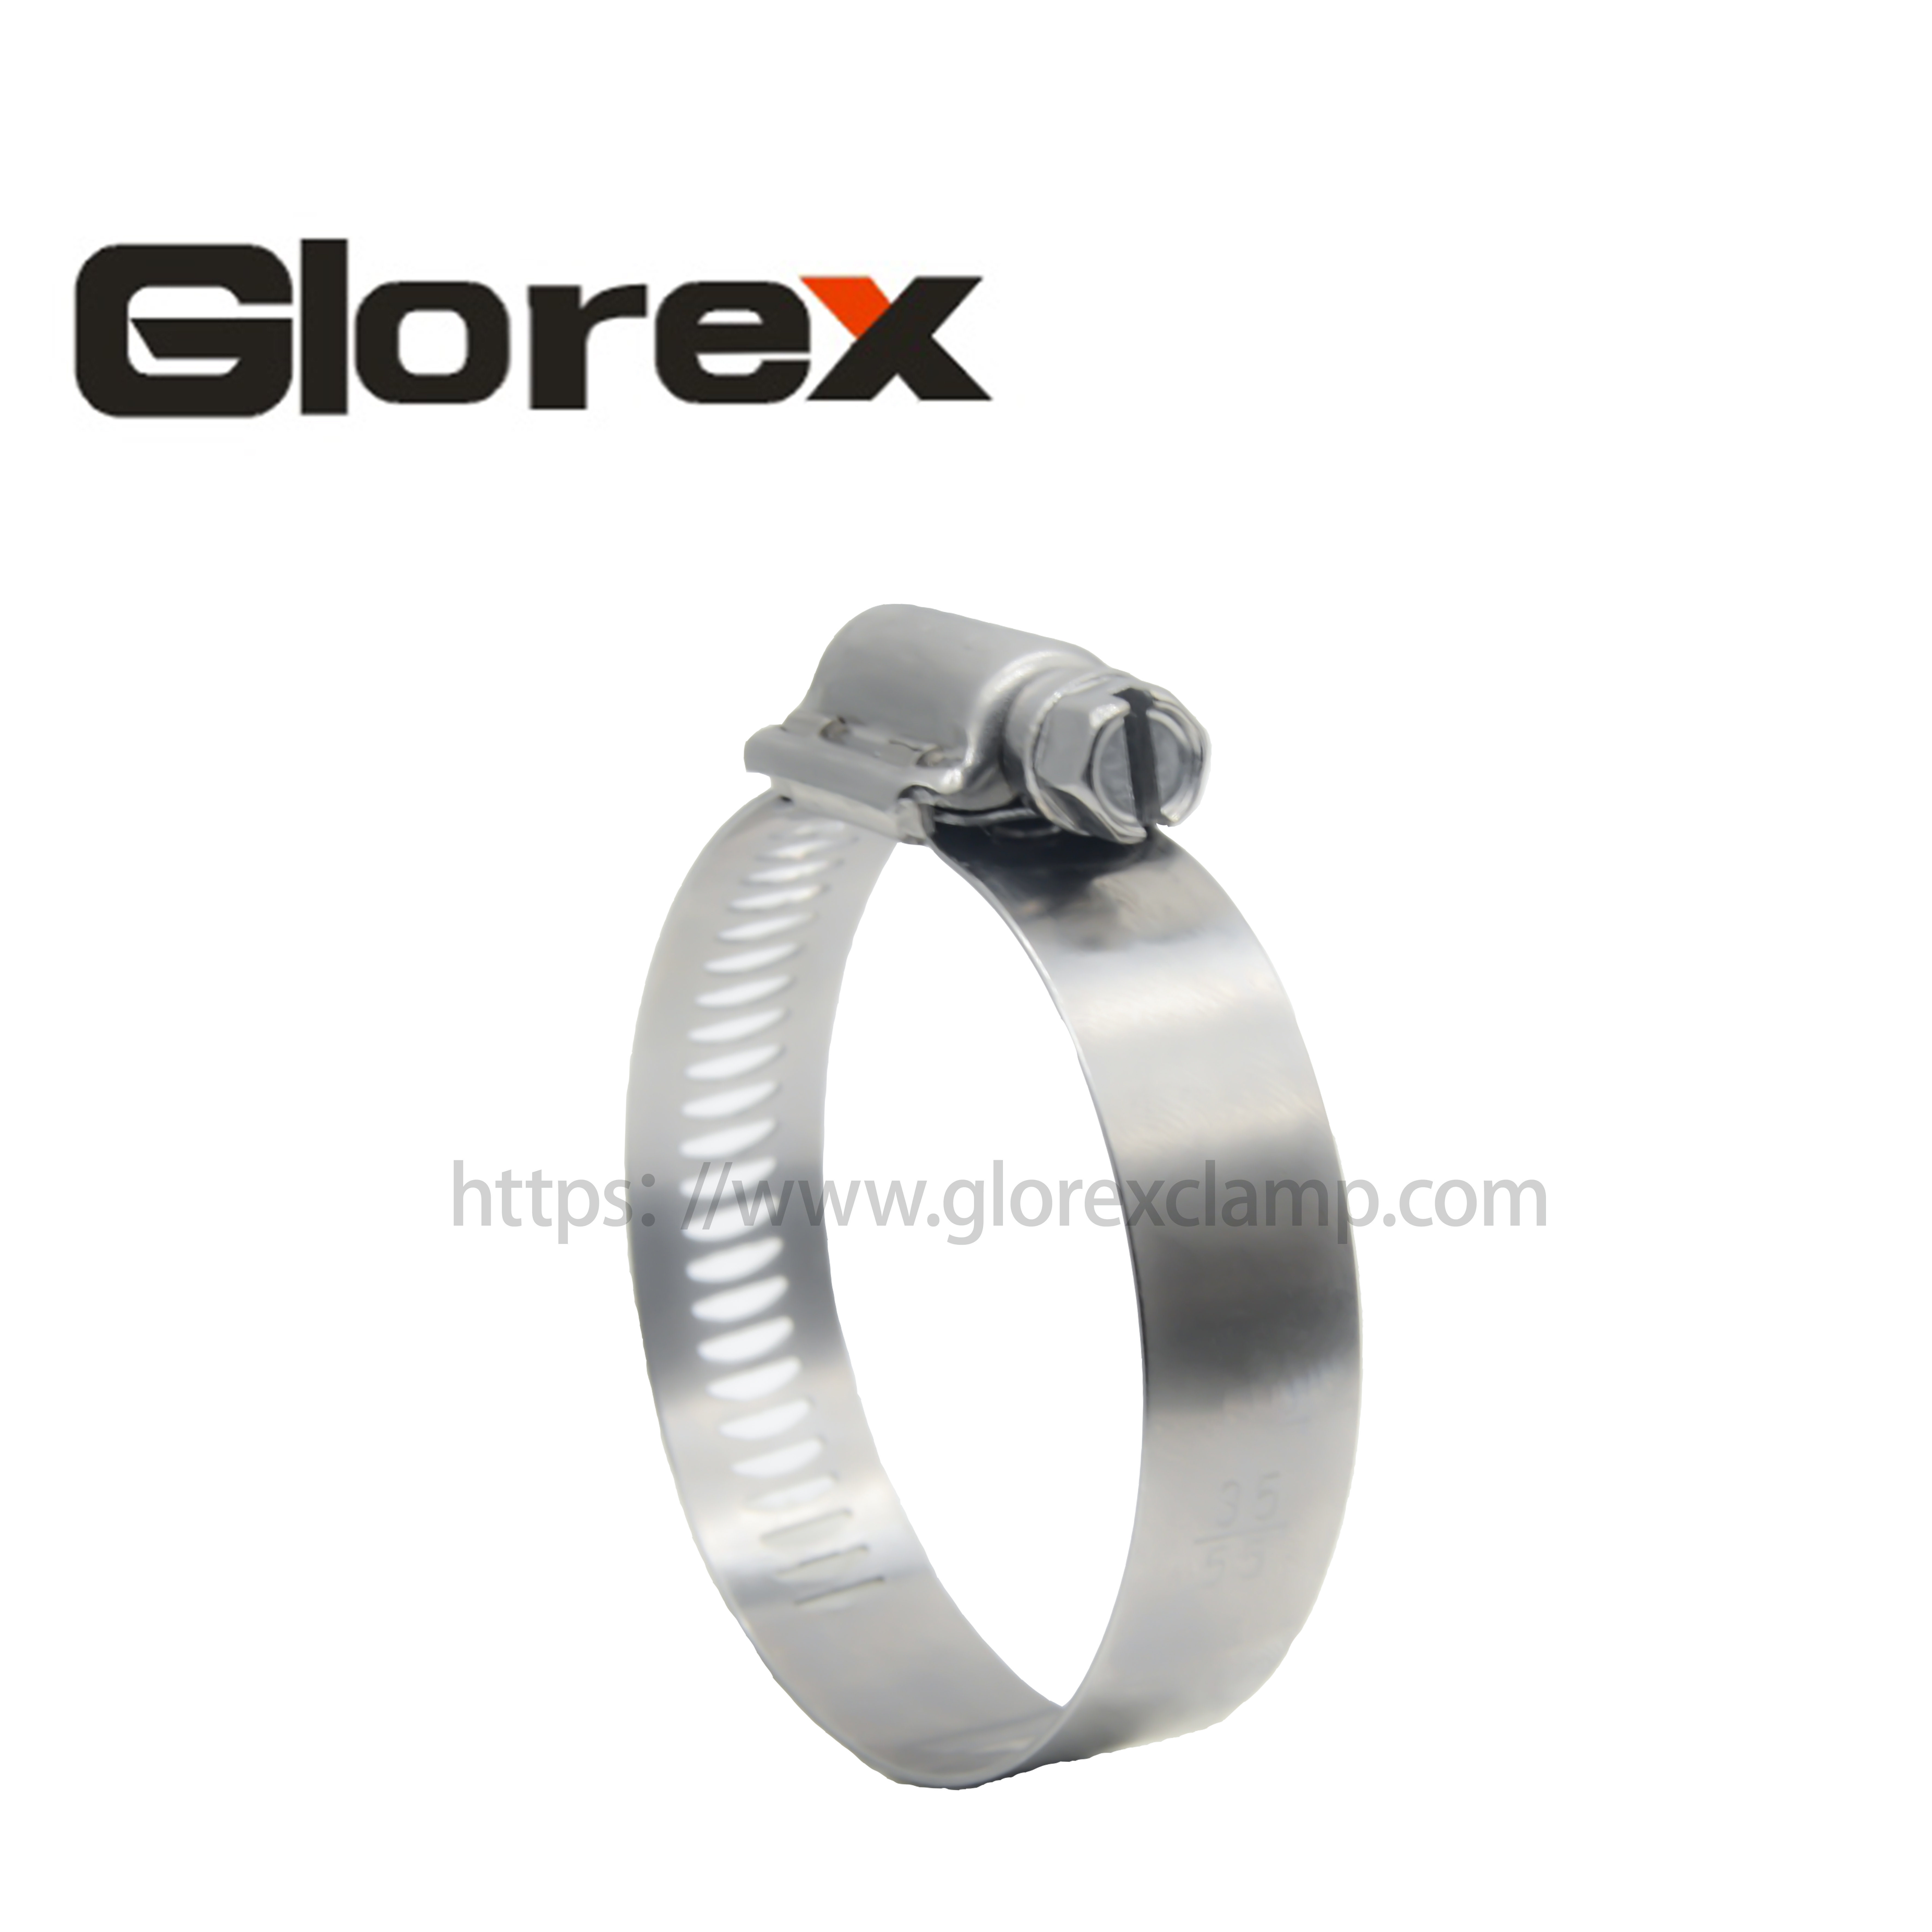 Wholesale Discount Dryer Hose Clamps - American type heavy duty clamp – Glorex